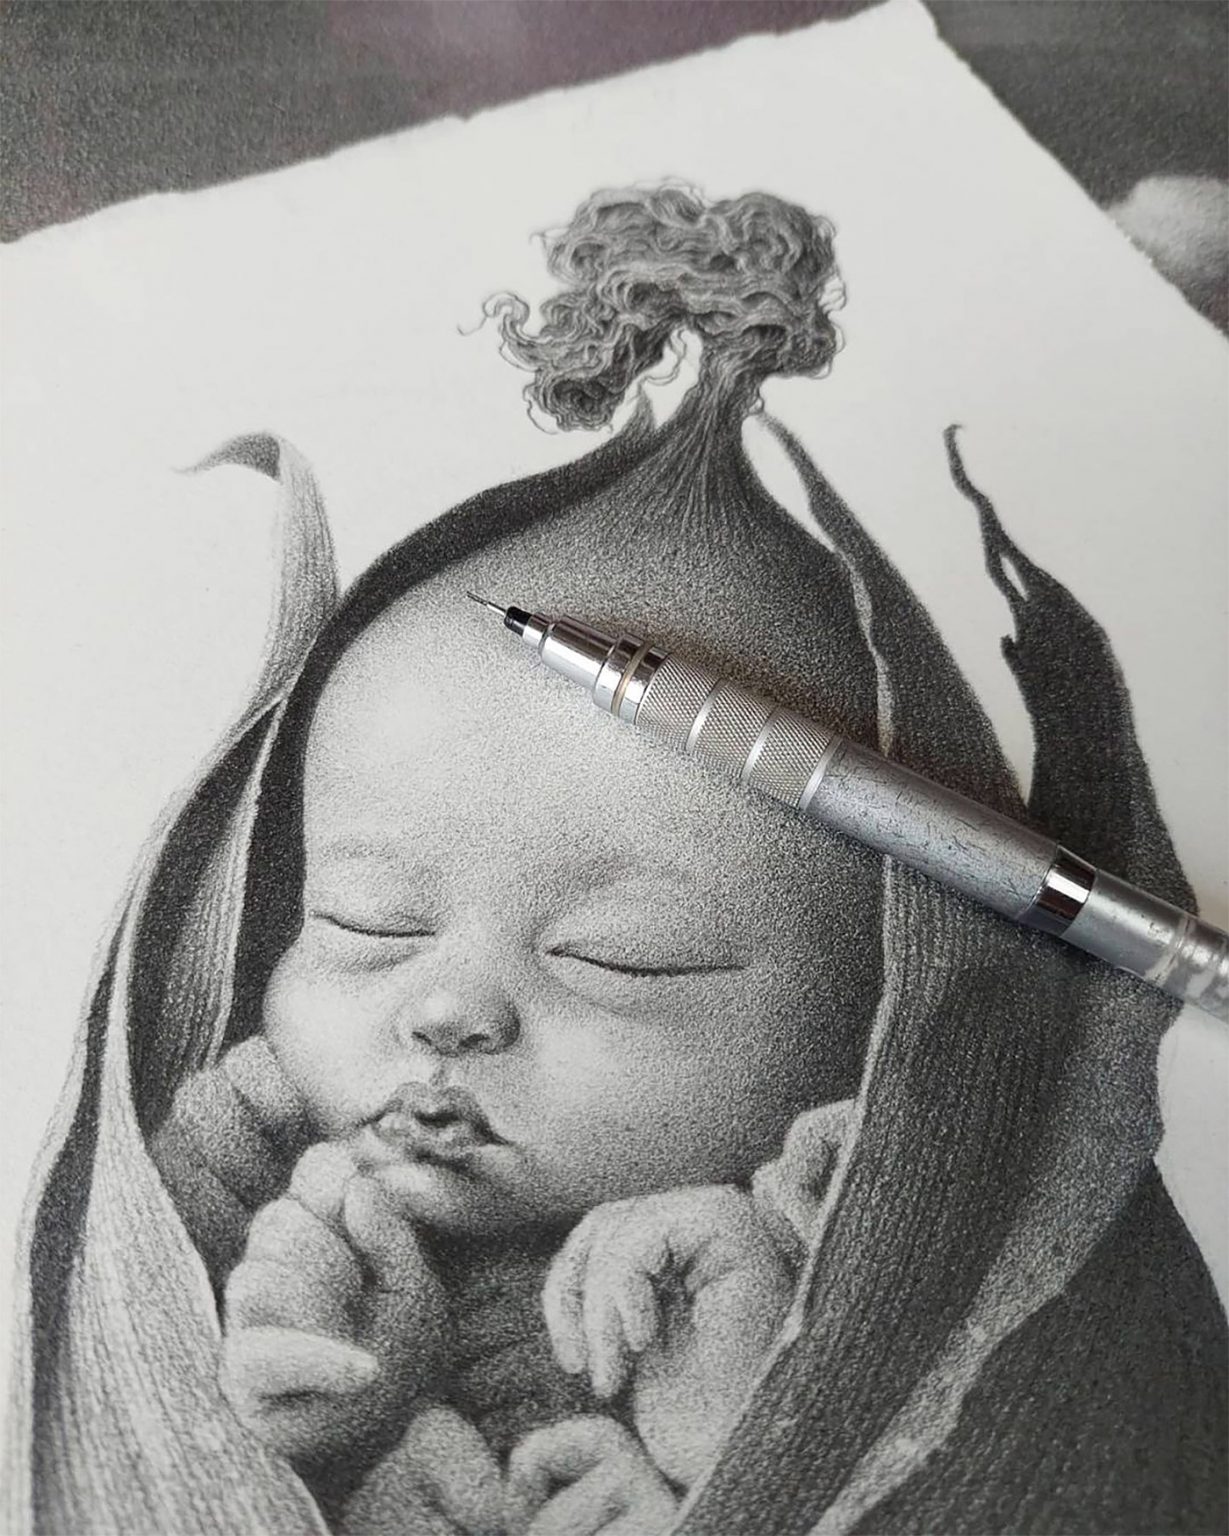 Garis Edelweiss超现实风格铅笔画作品